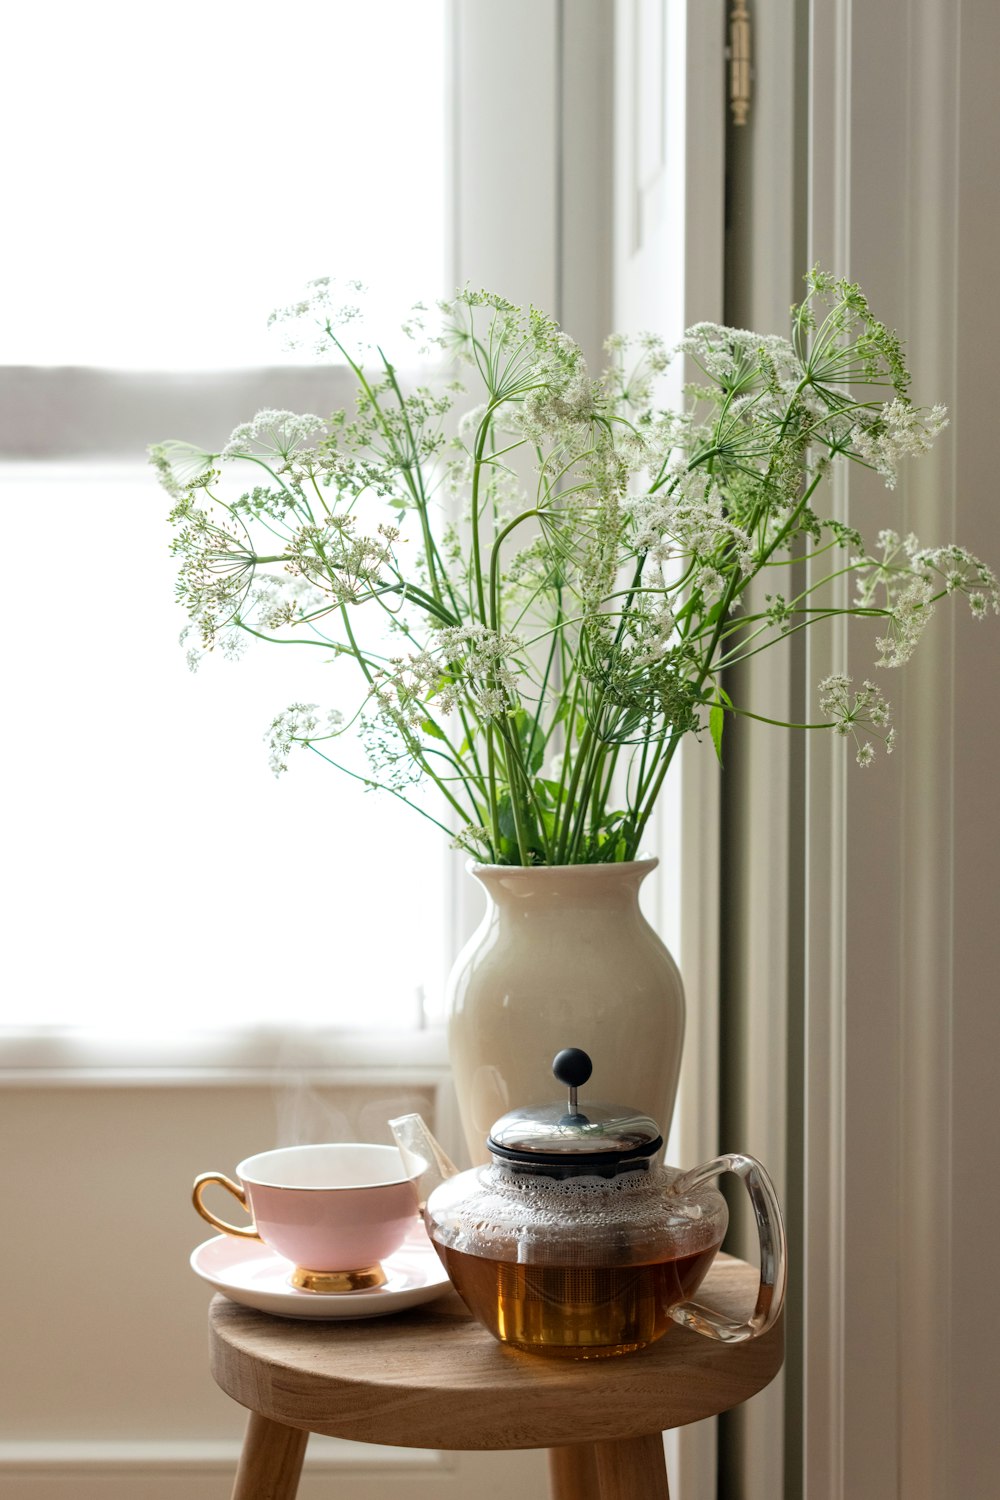 white ceramic teacup on saucer beside white flowers